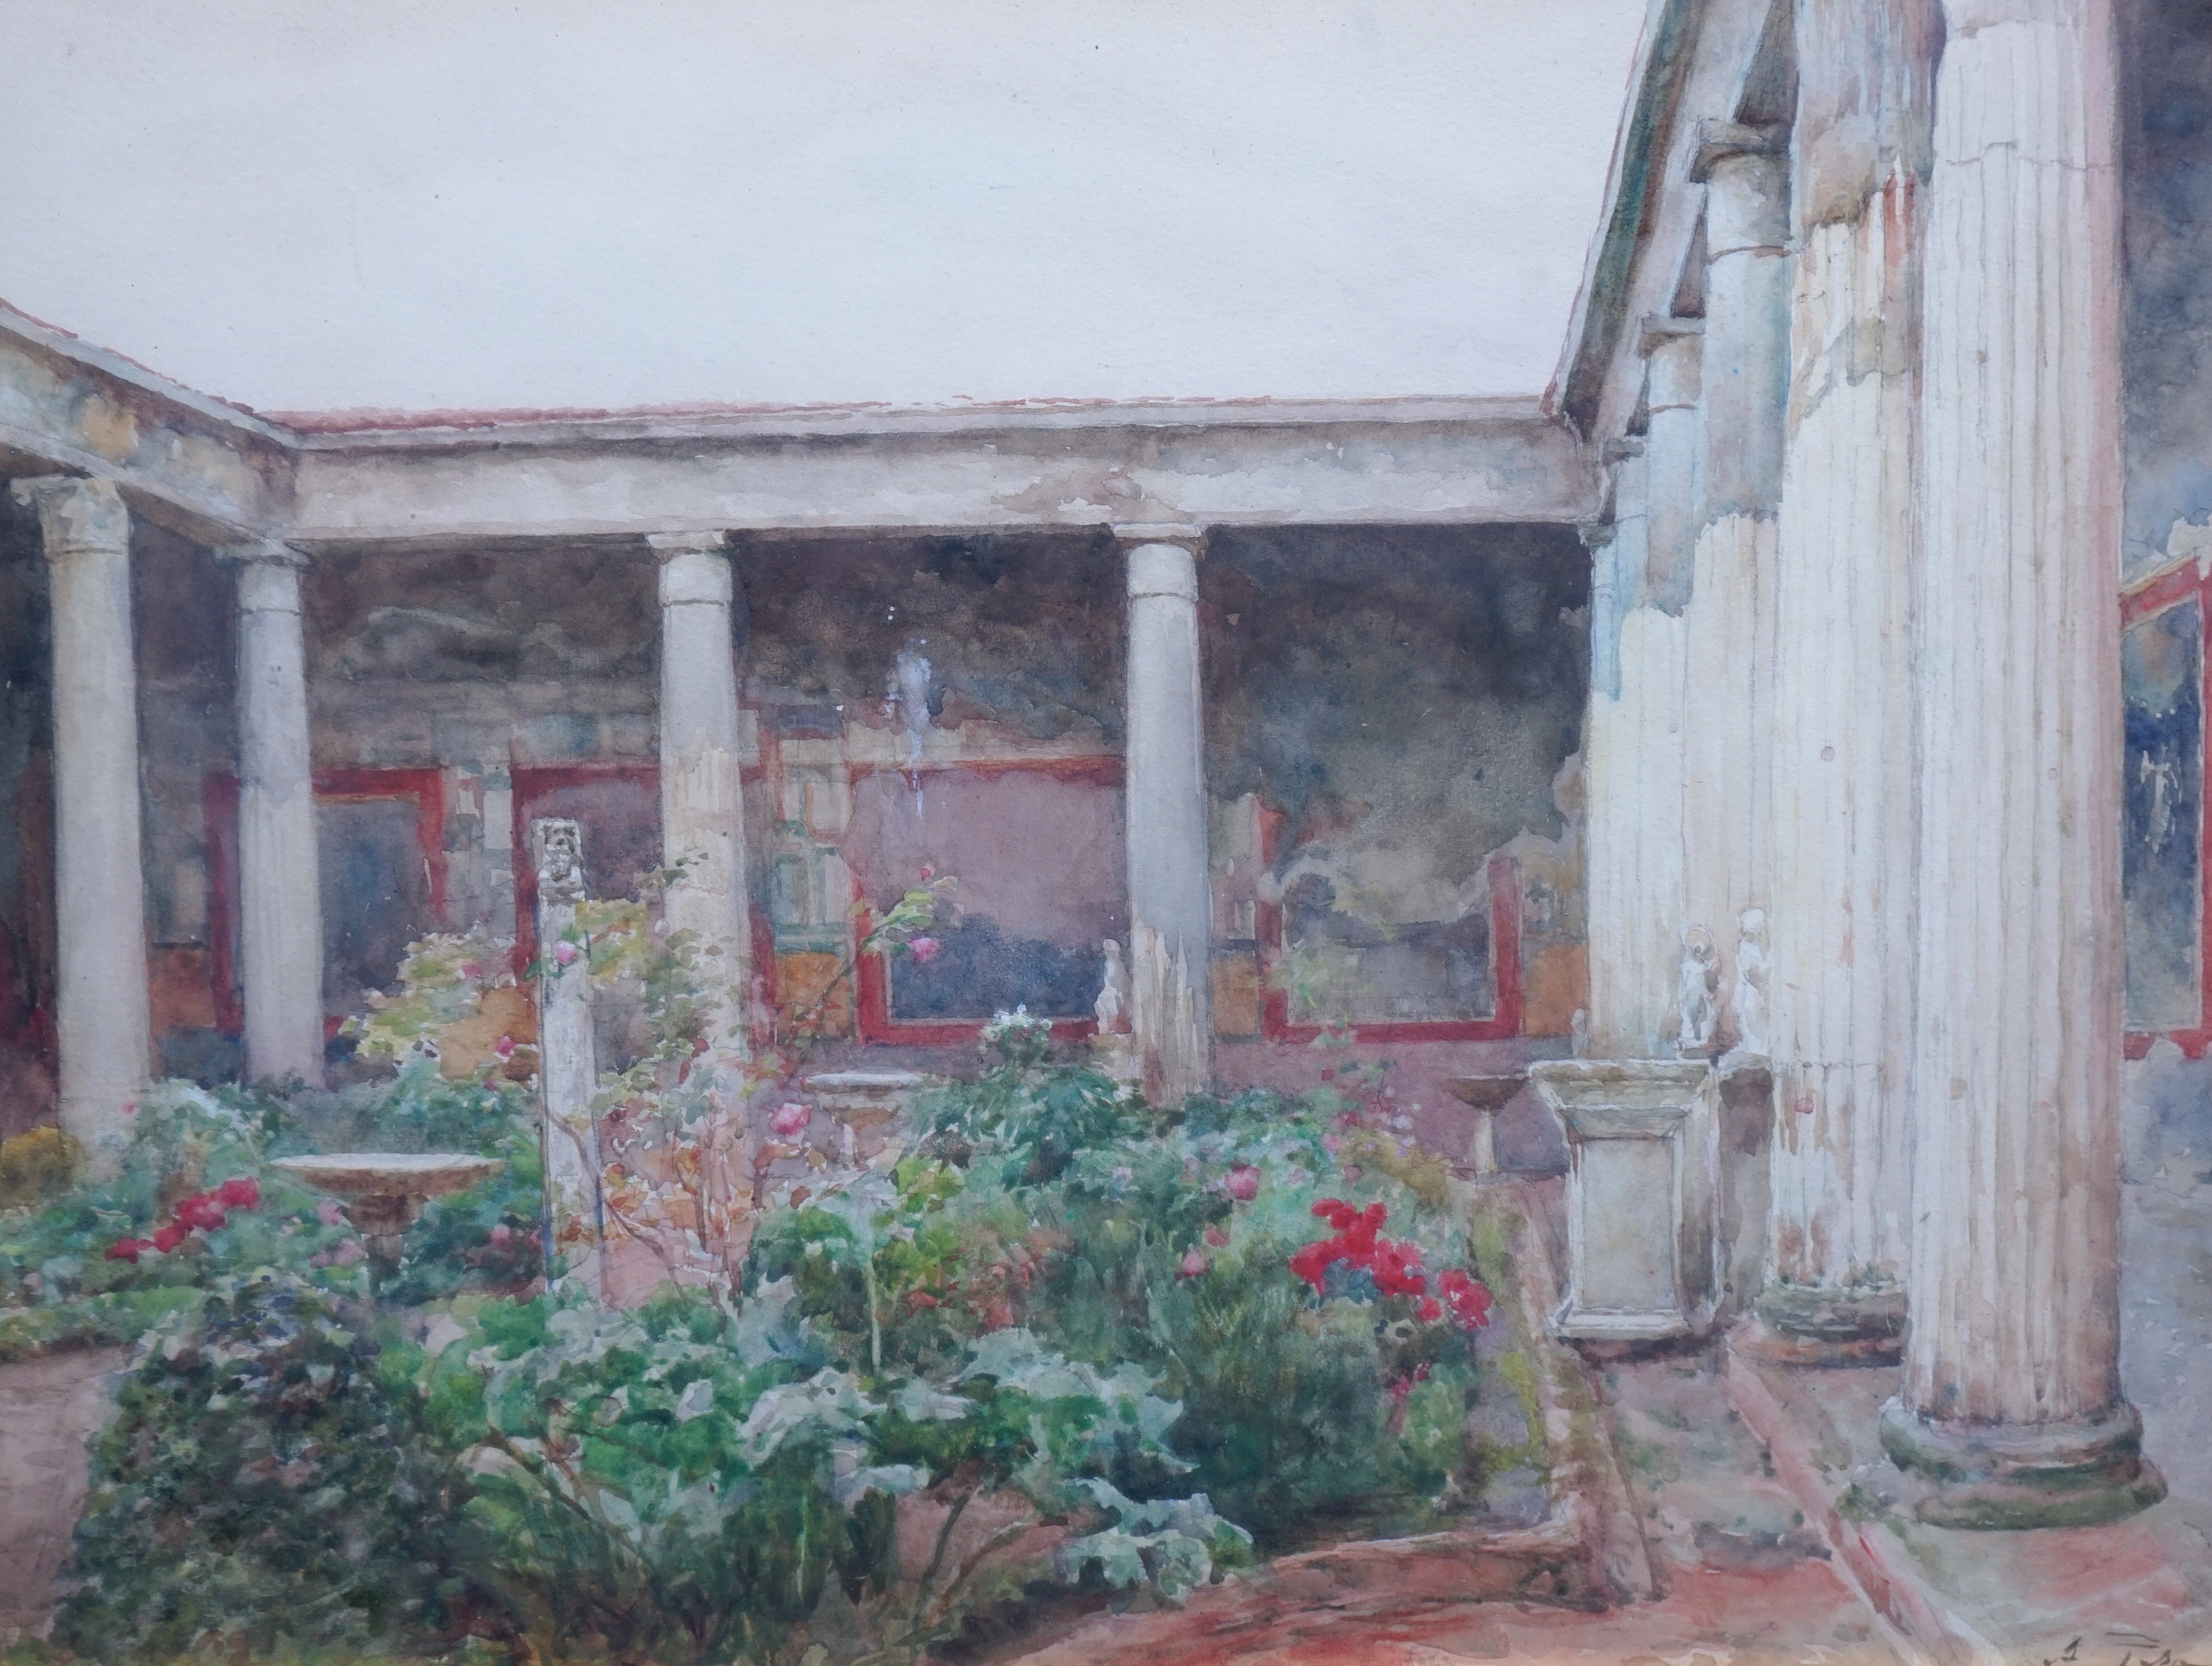 Alberto Pisa (Italian, 1864-1930), Courtyard of the House of Vetti, Pompeii, watercolour, 26 x 35cm